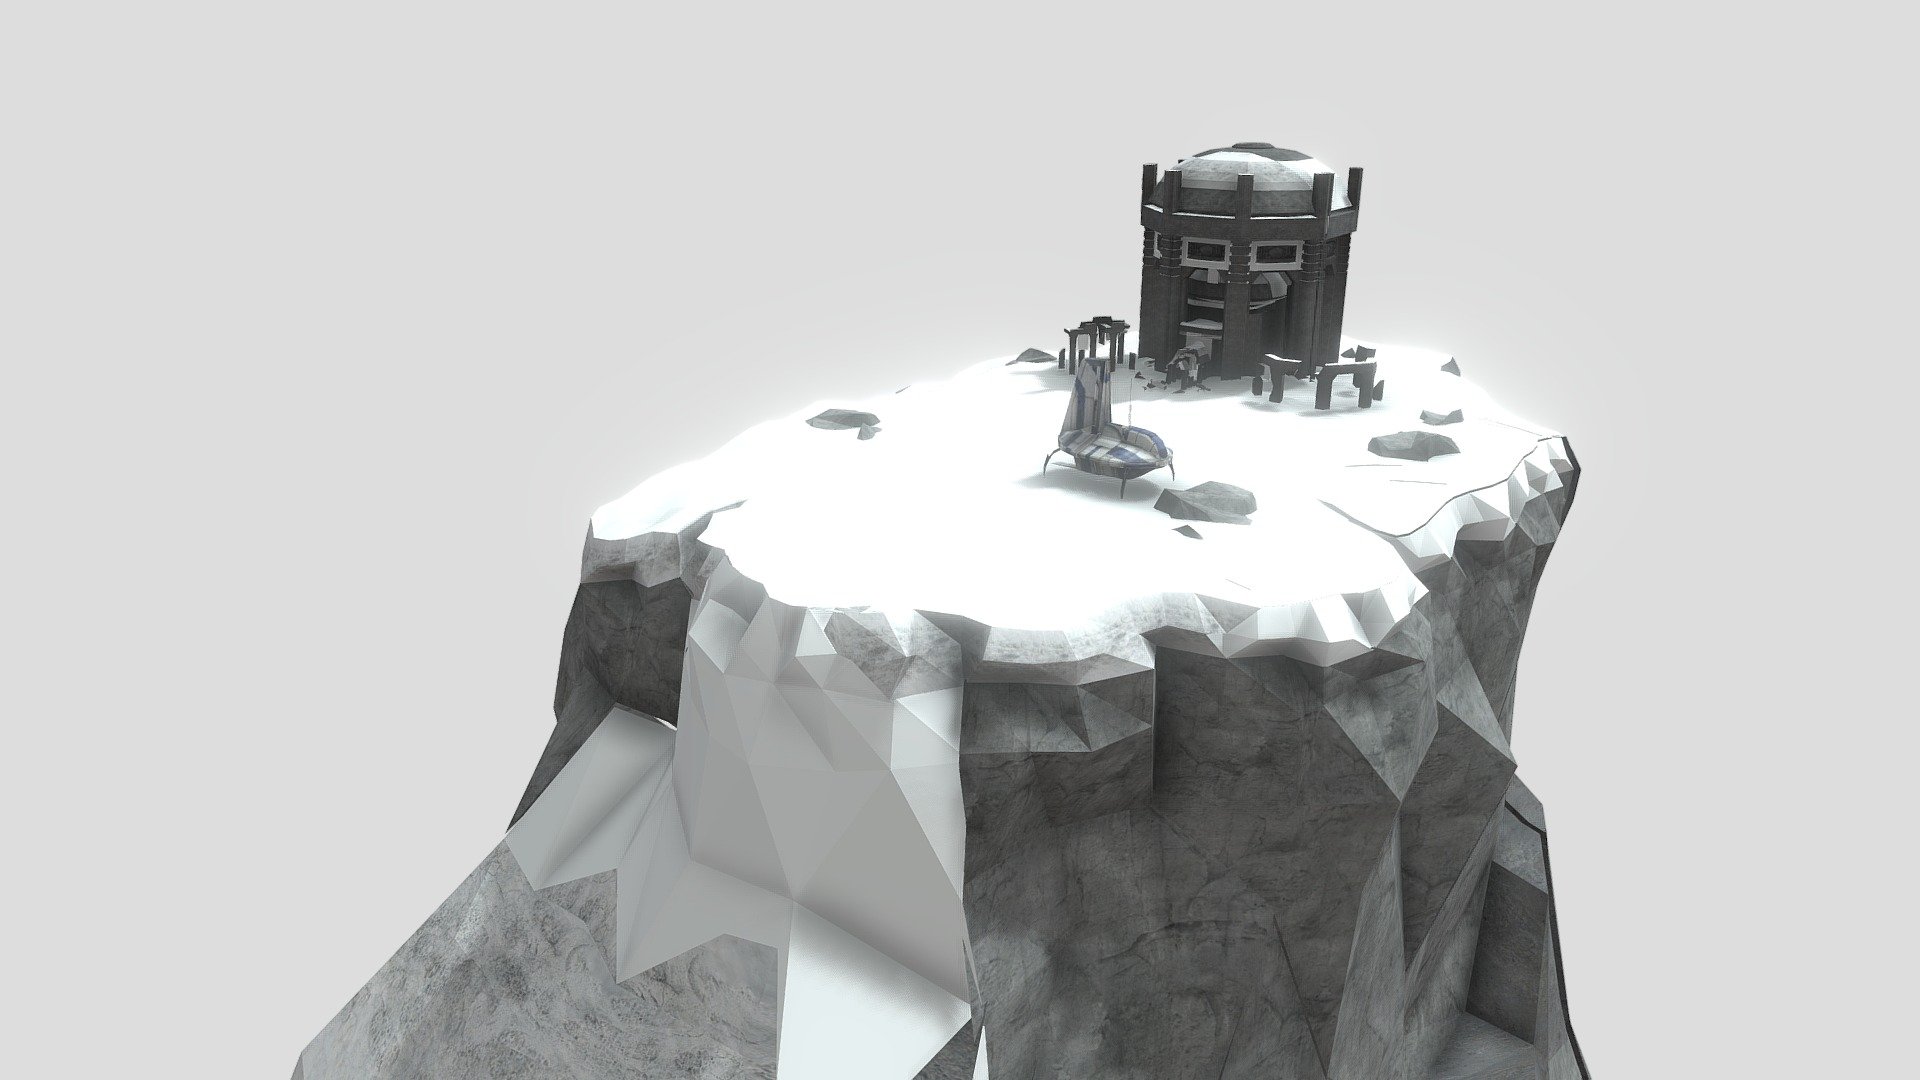 Corellia Frozen Hilltop Ruins from the cutscene from TFU (Wii/PS2/PSP) 3d model